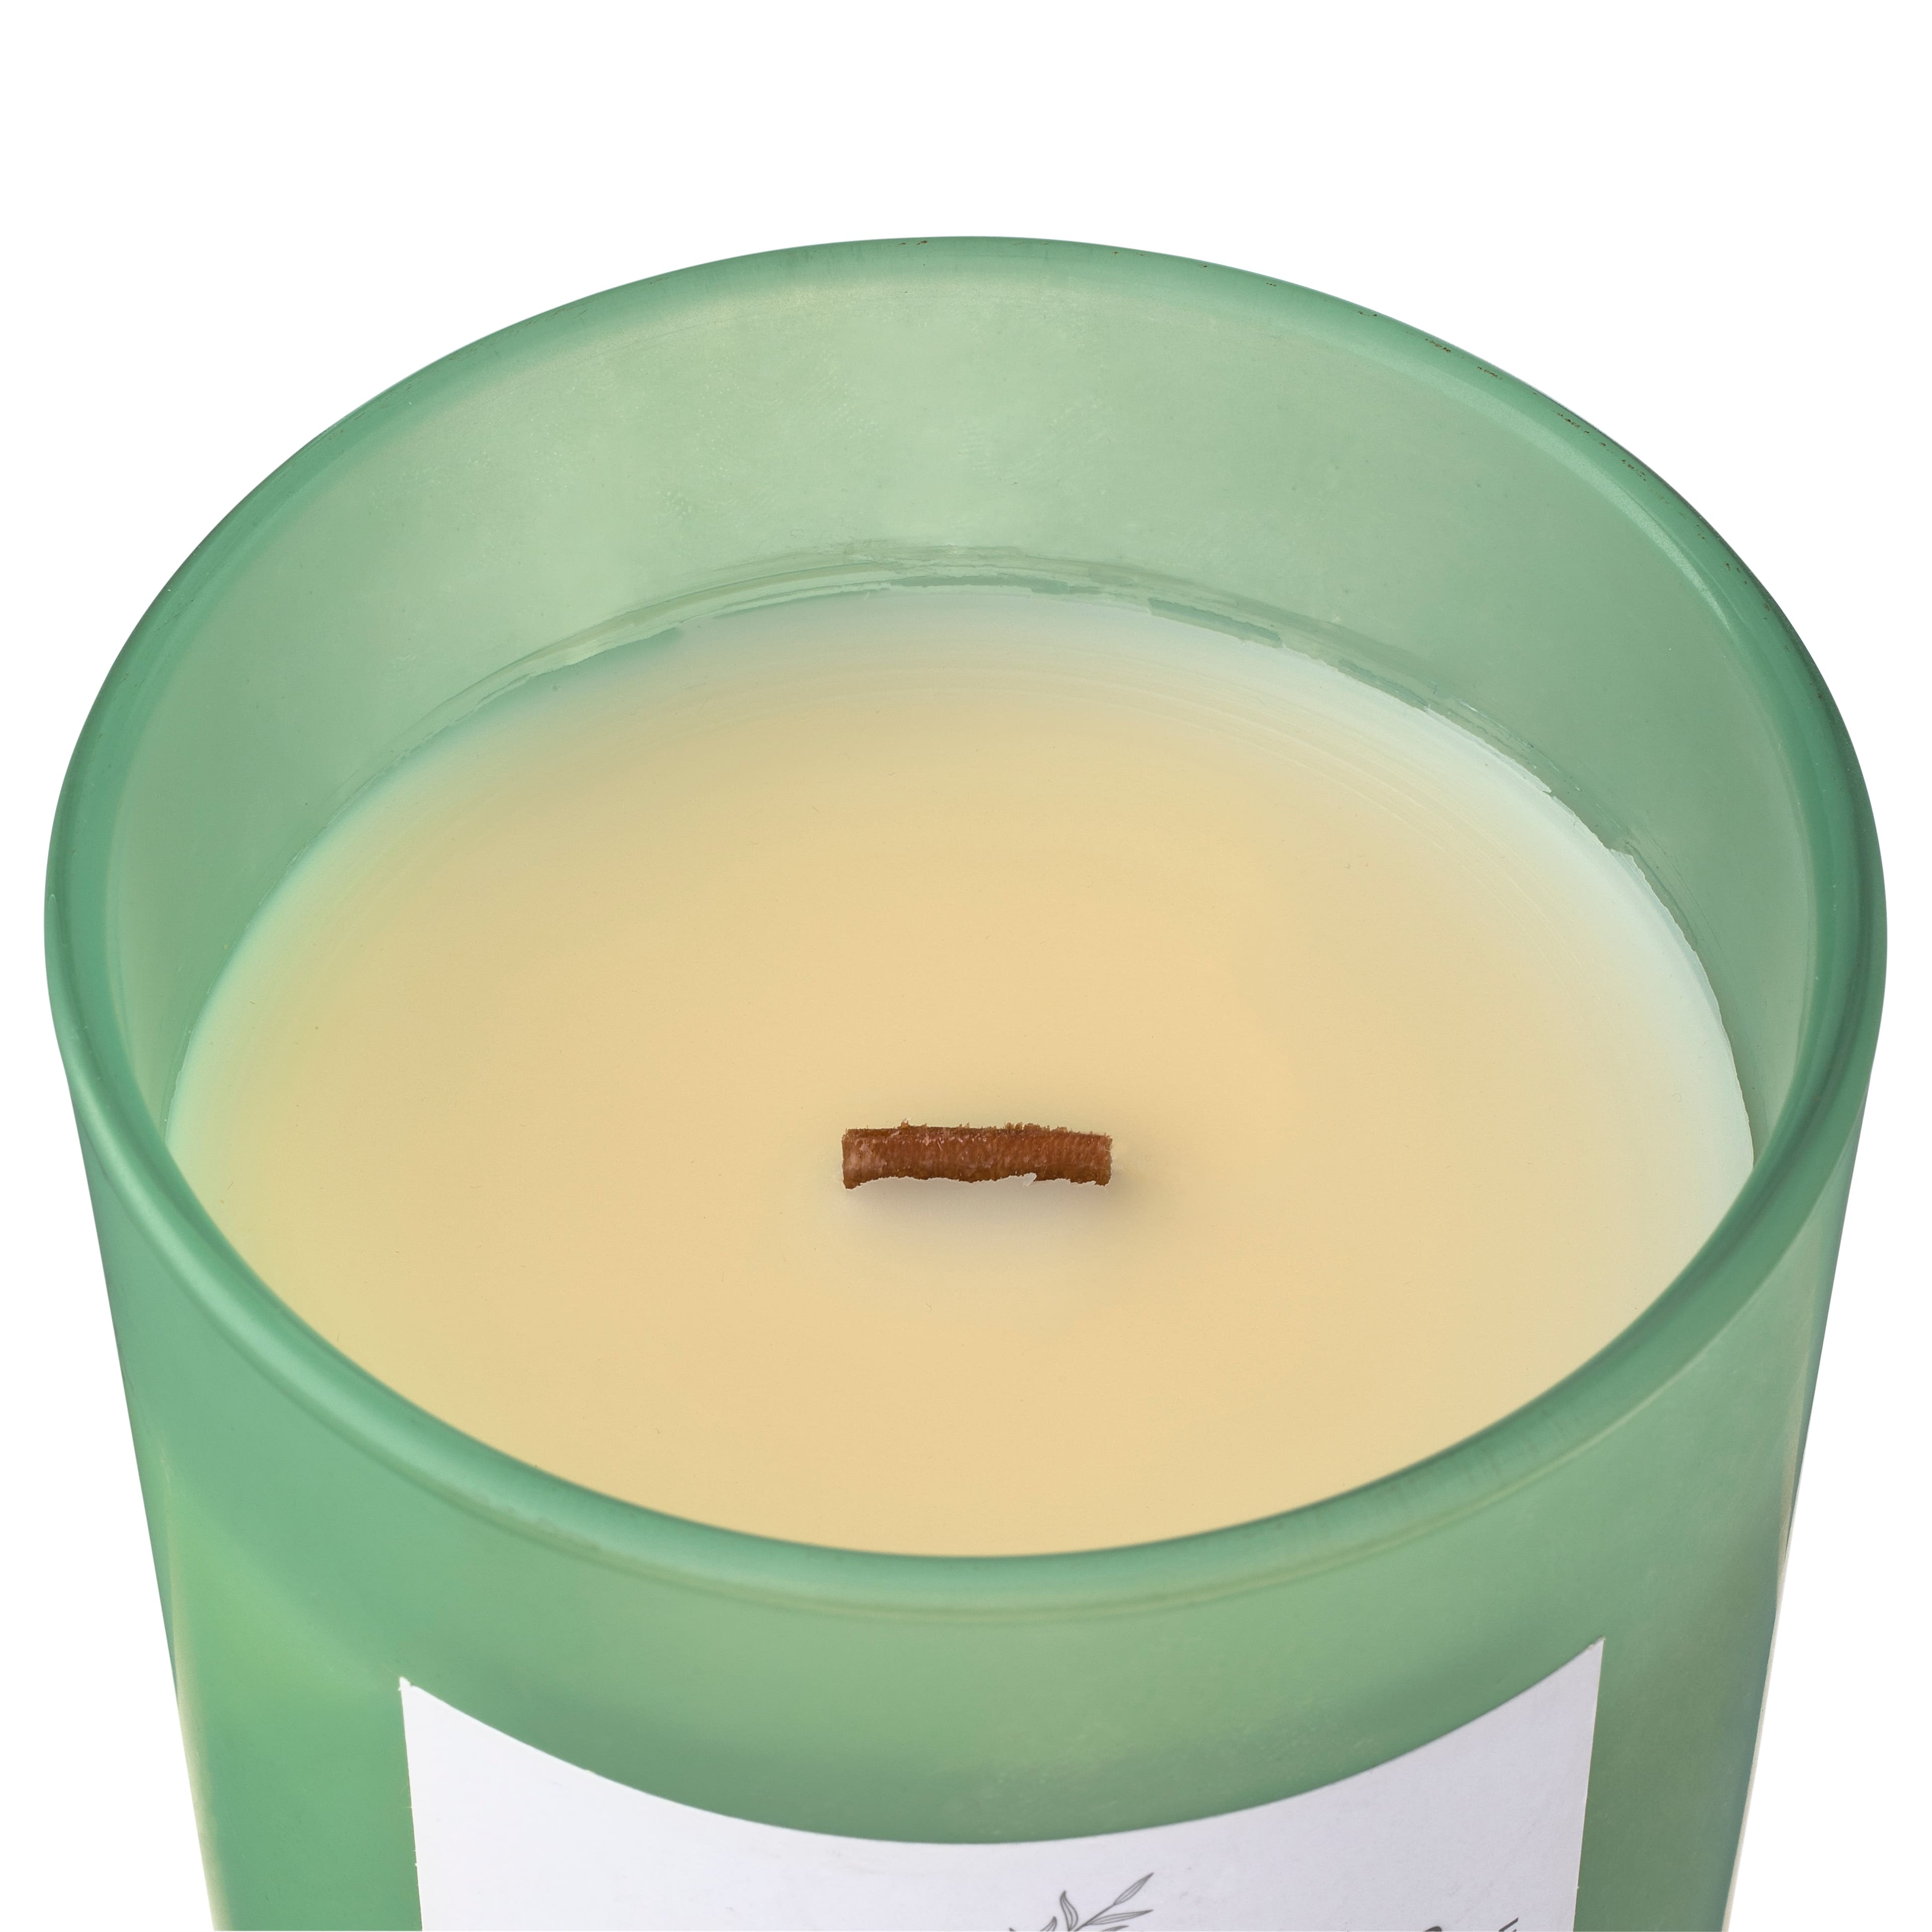 Bergamot &#x26; Rosewood Wooden Wick Jar Candle by Ashland&#xAE;